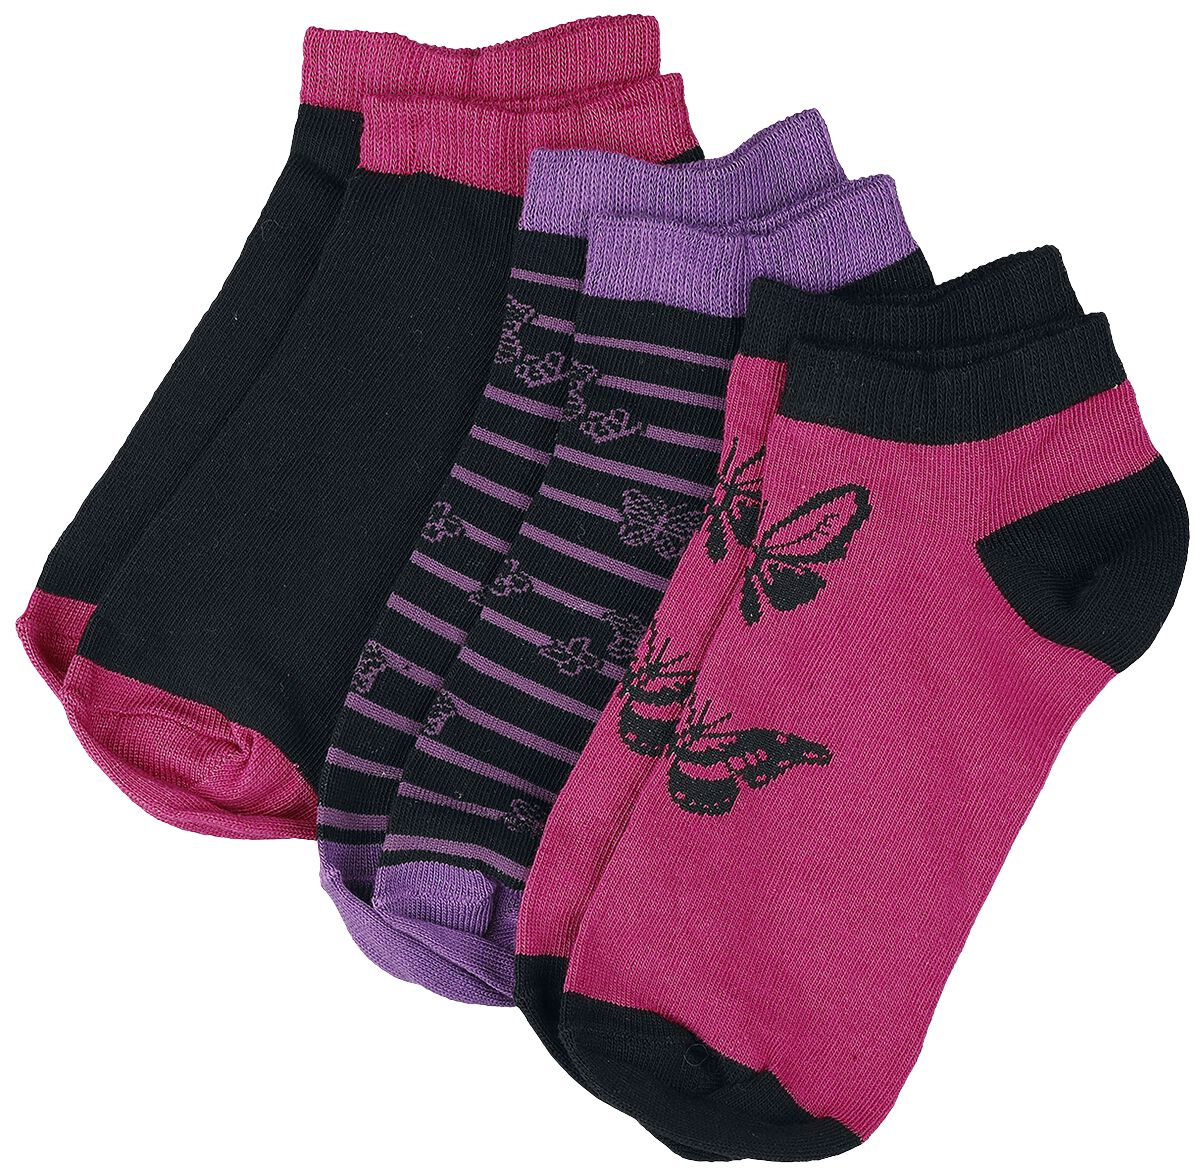 Full Volume by EMP Socken - Dreierpack Socken mit Butterfly - EU35-38 bis EU39-42 - Größe EU 39-42 - schwarz